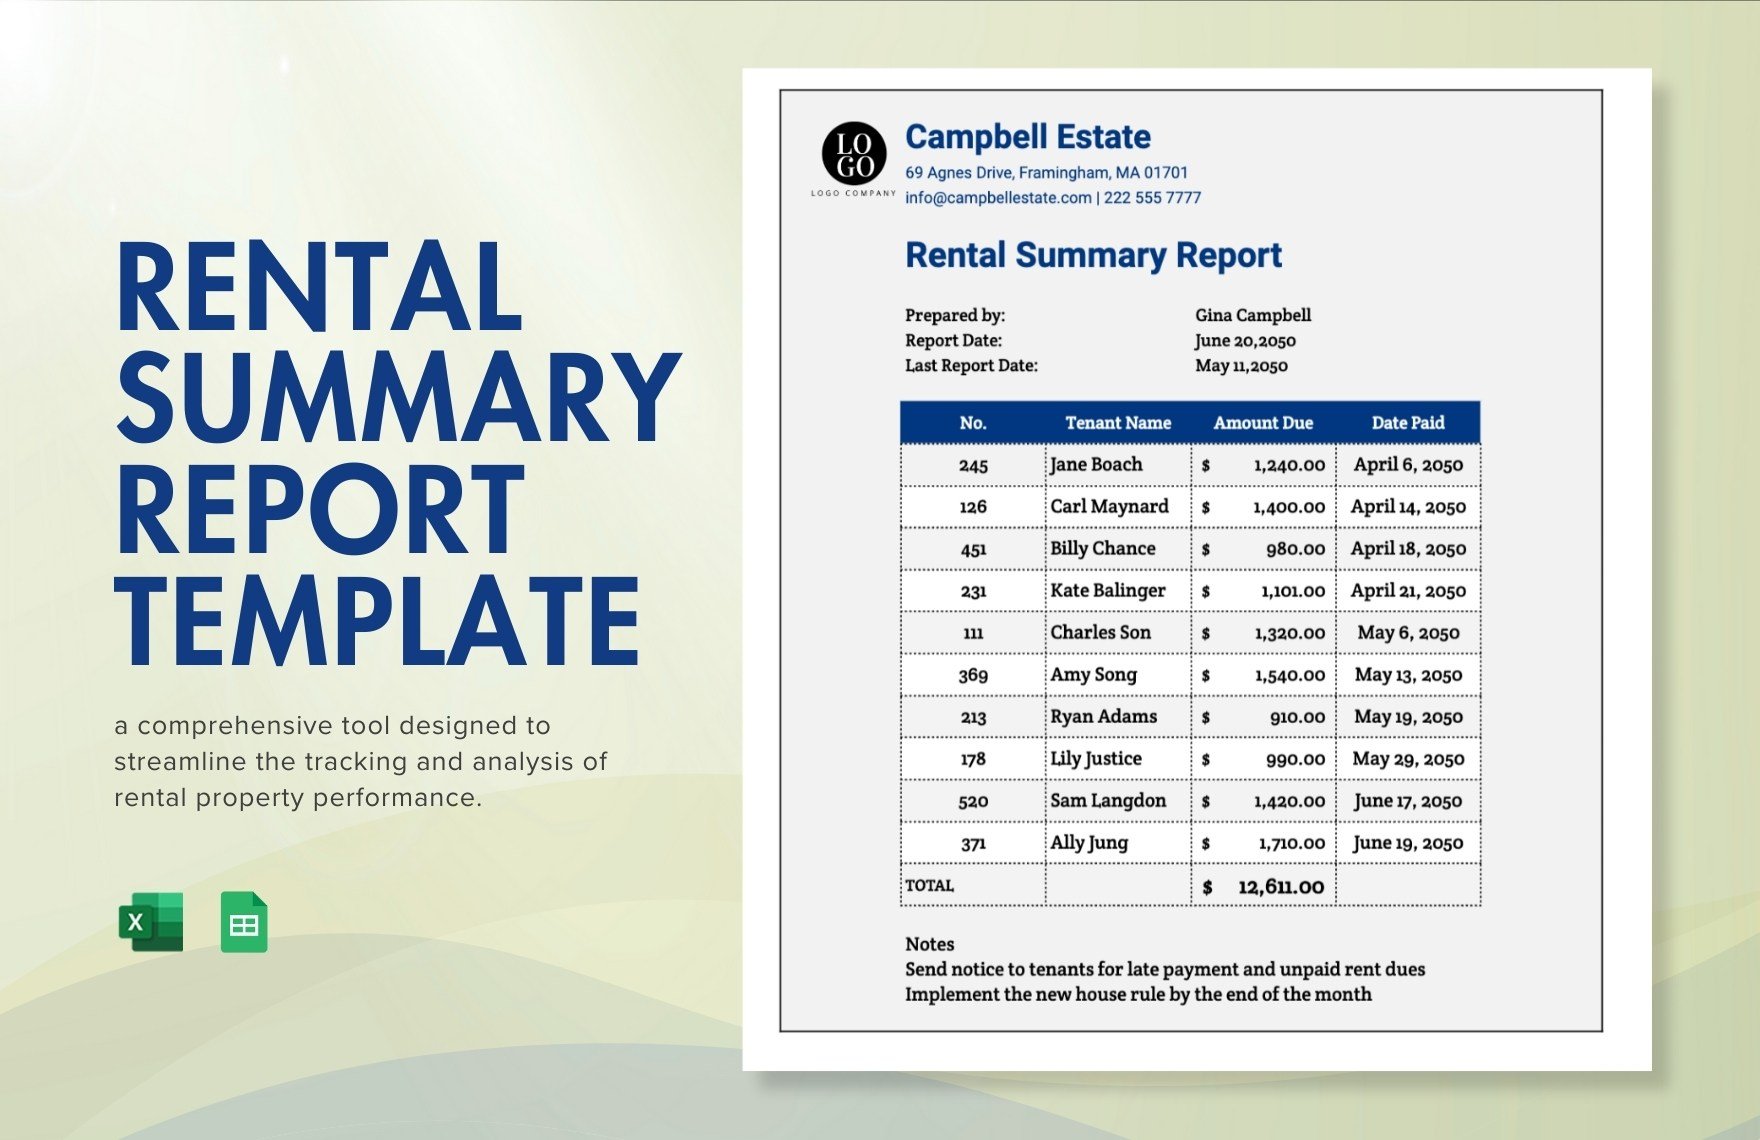 Free Rental Summary Report